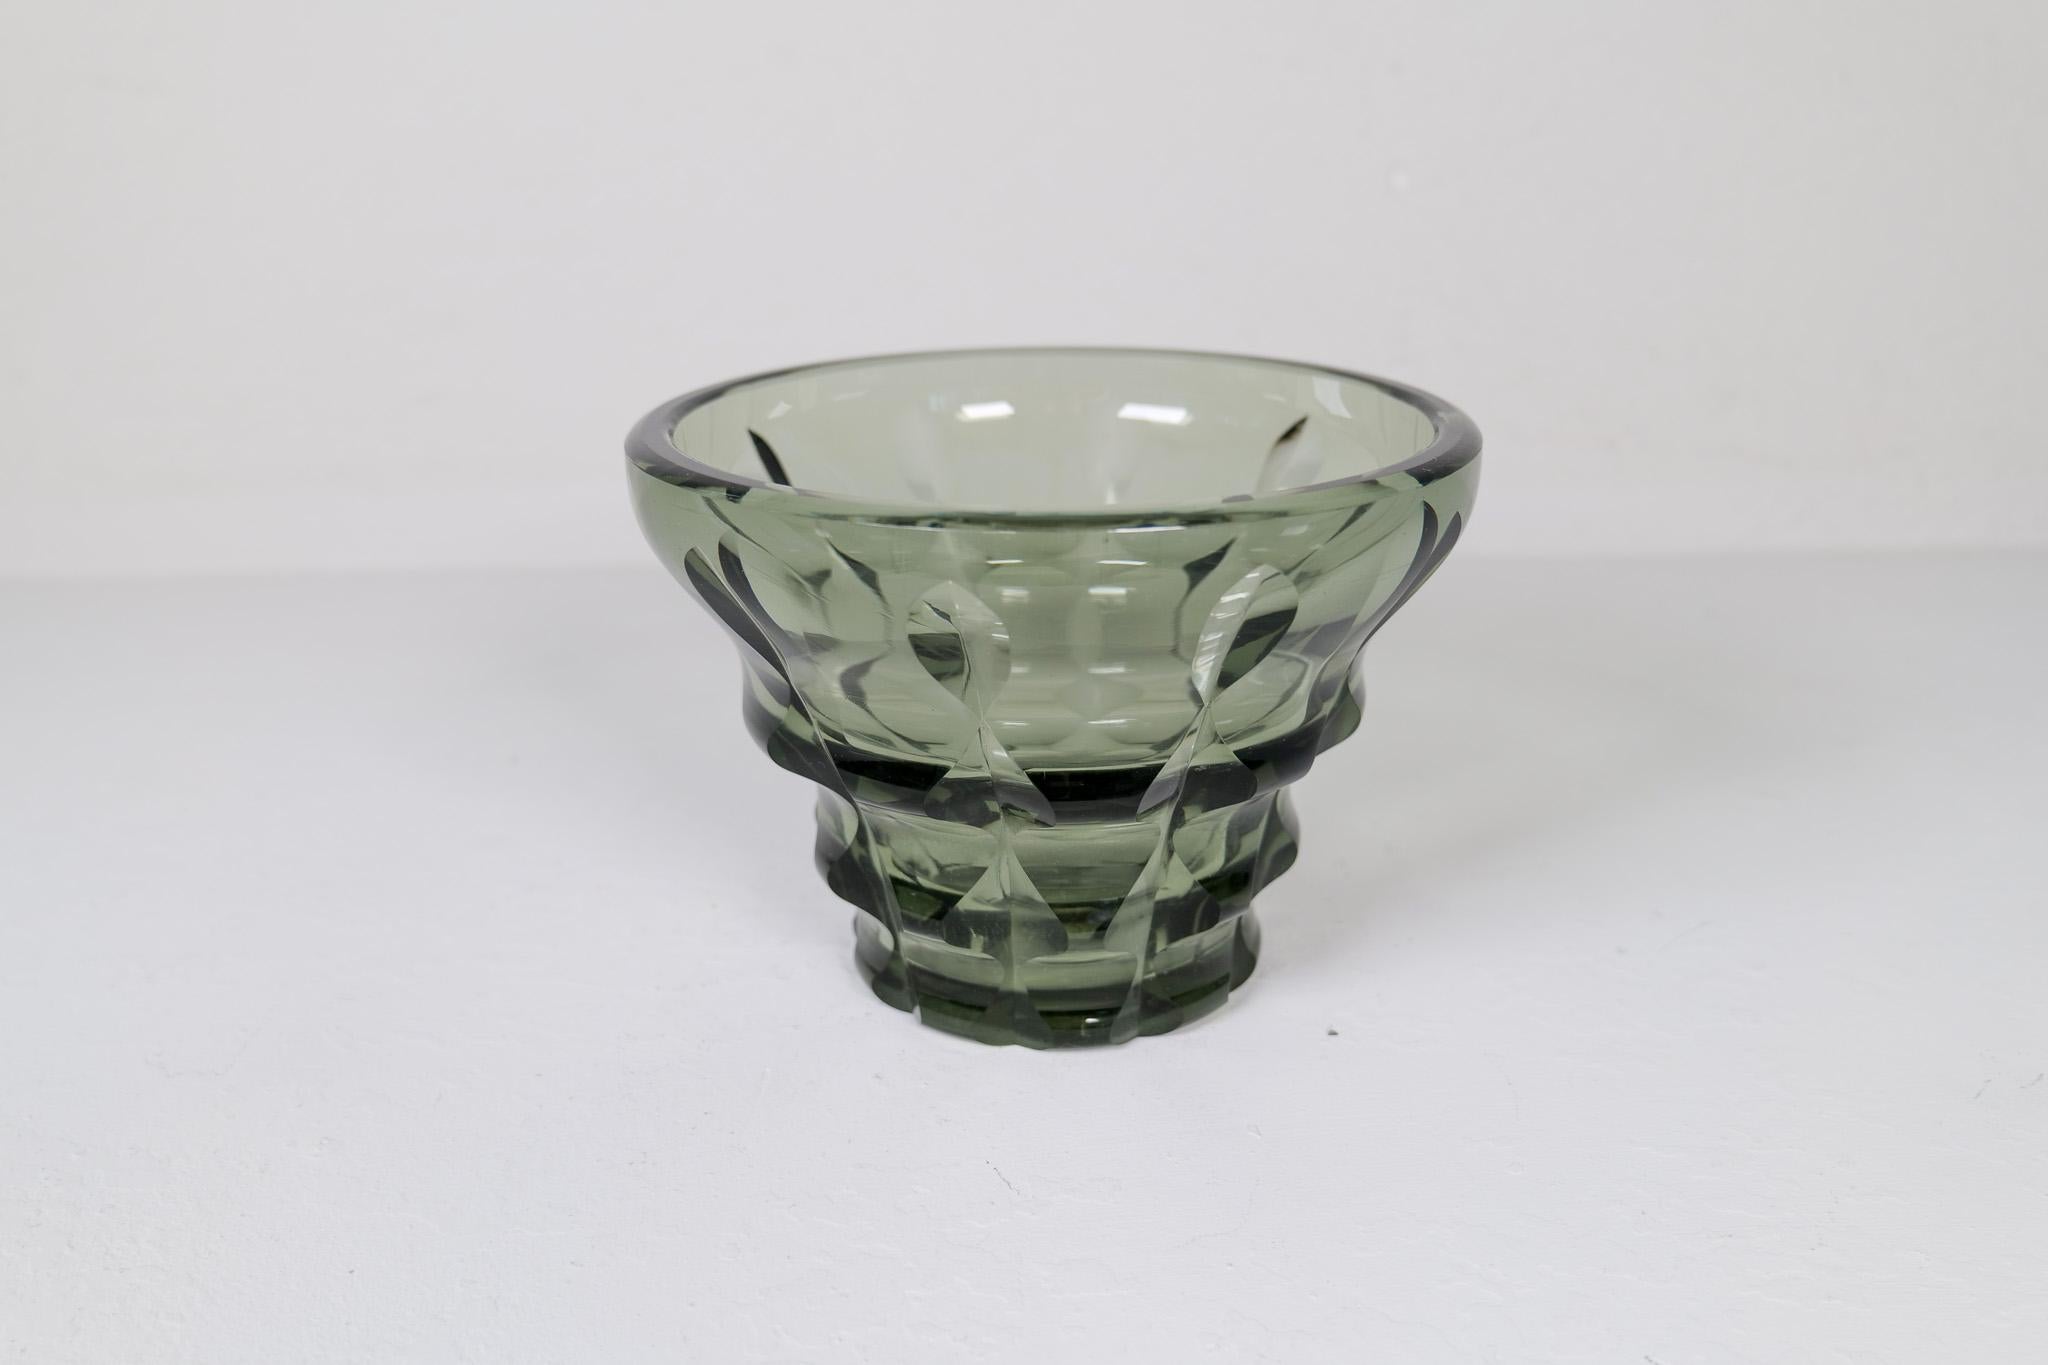  Art Deco Glass Bowl Sweden 1930s  In Good Condition For Sale In Hillringsberg, SE